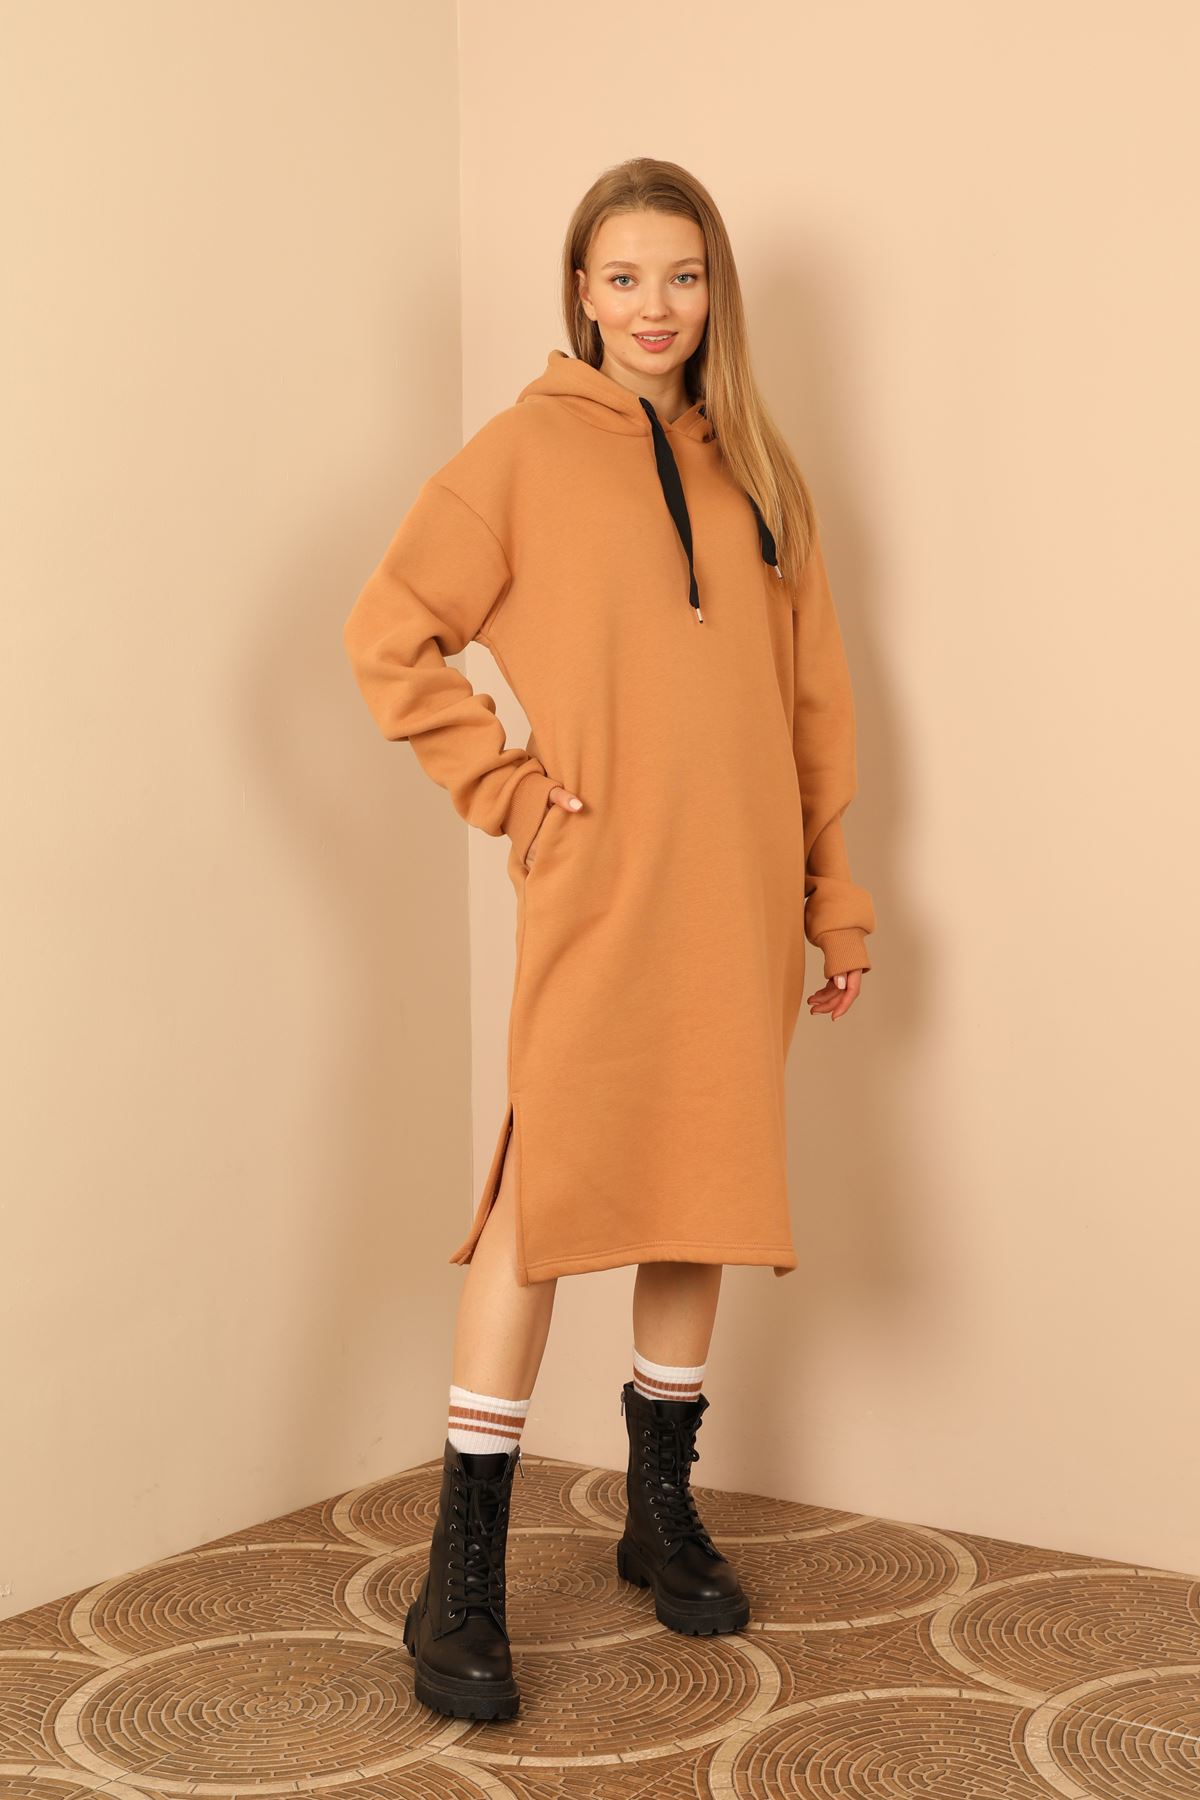 Third Knit With Wool İnside Fabric Long Sleeve Hooded Oversize Women Dress - Light Brown